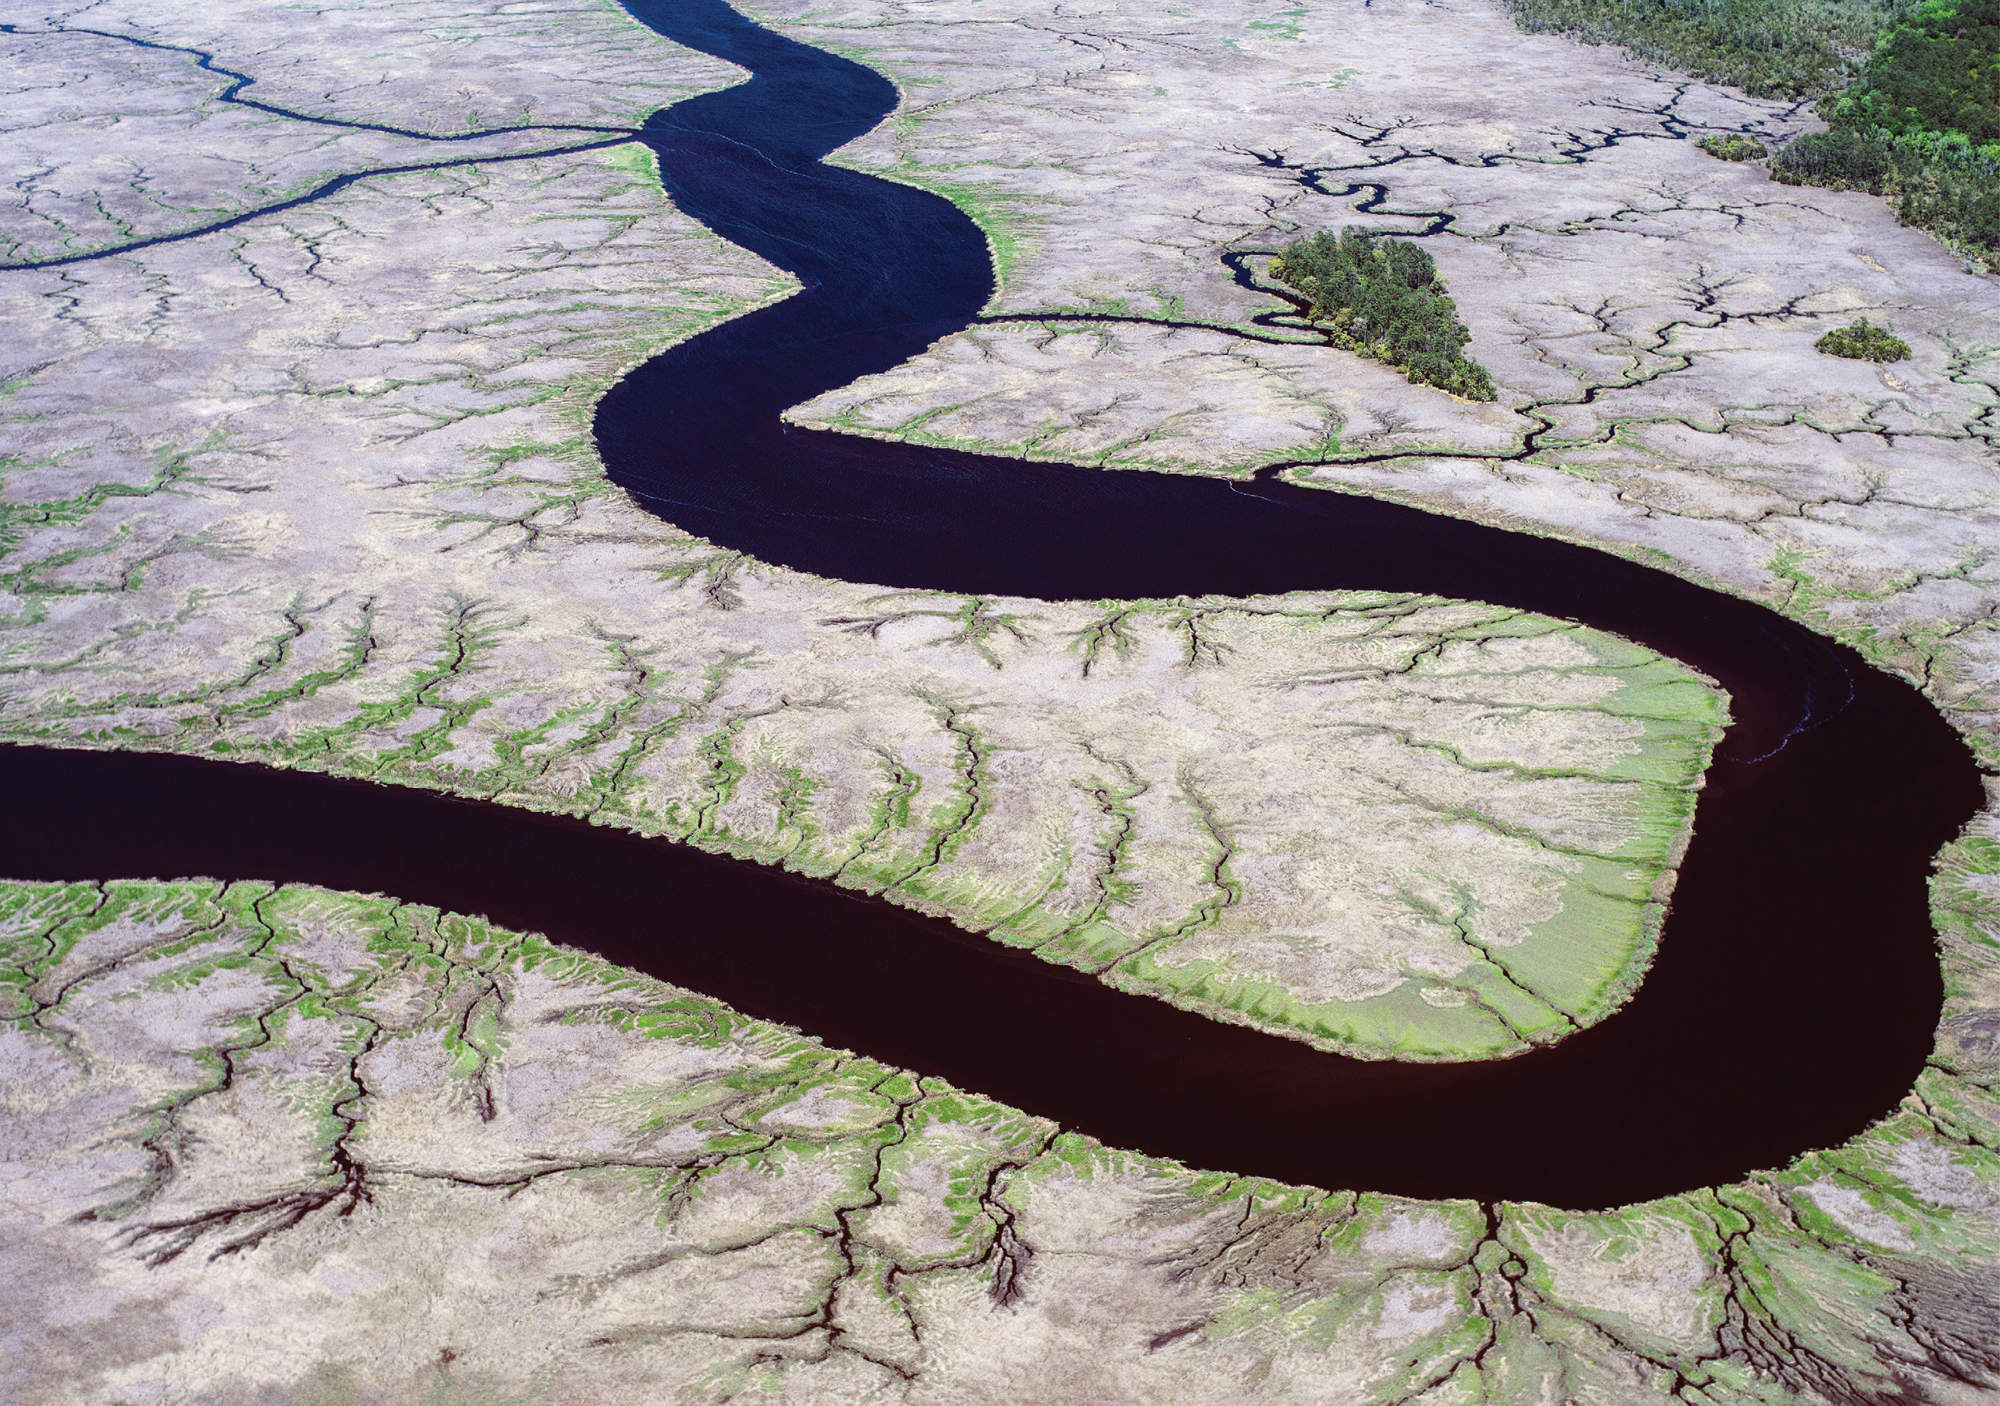 Wetlands in Spring with Fresh Green Growth (New River near Daufuskie Island; April 9, 2015)